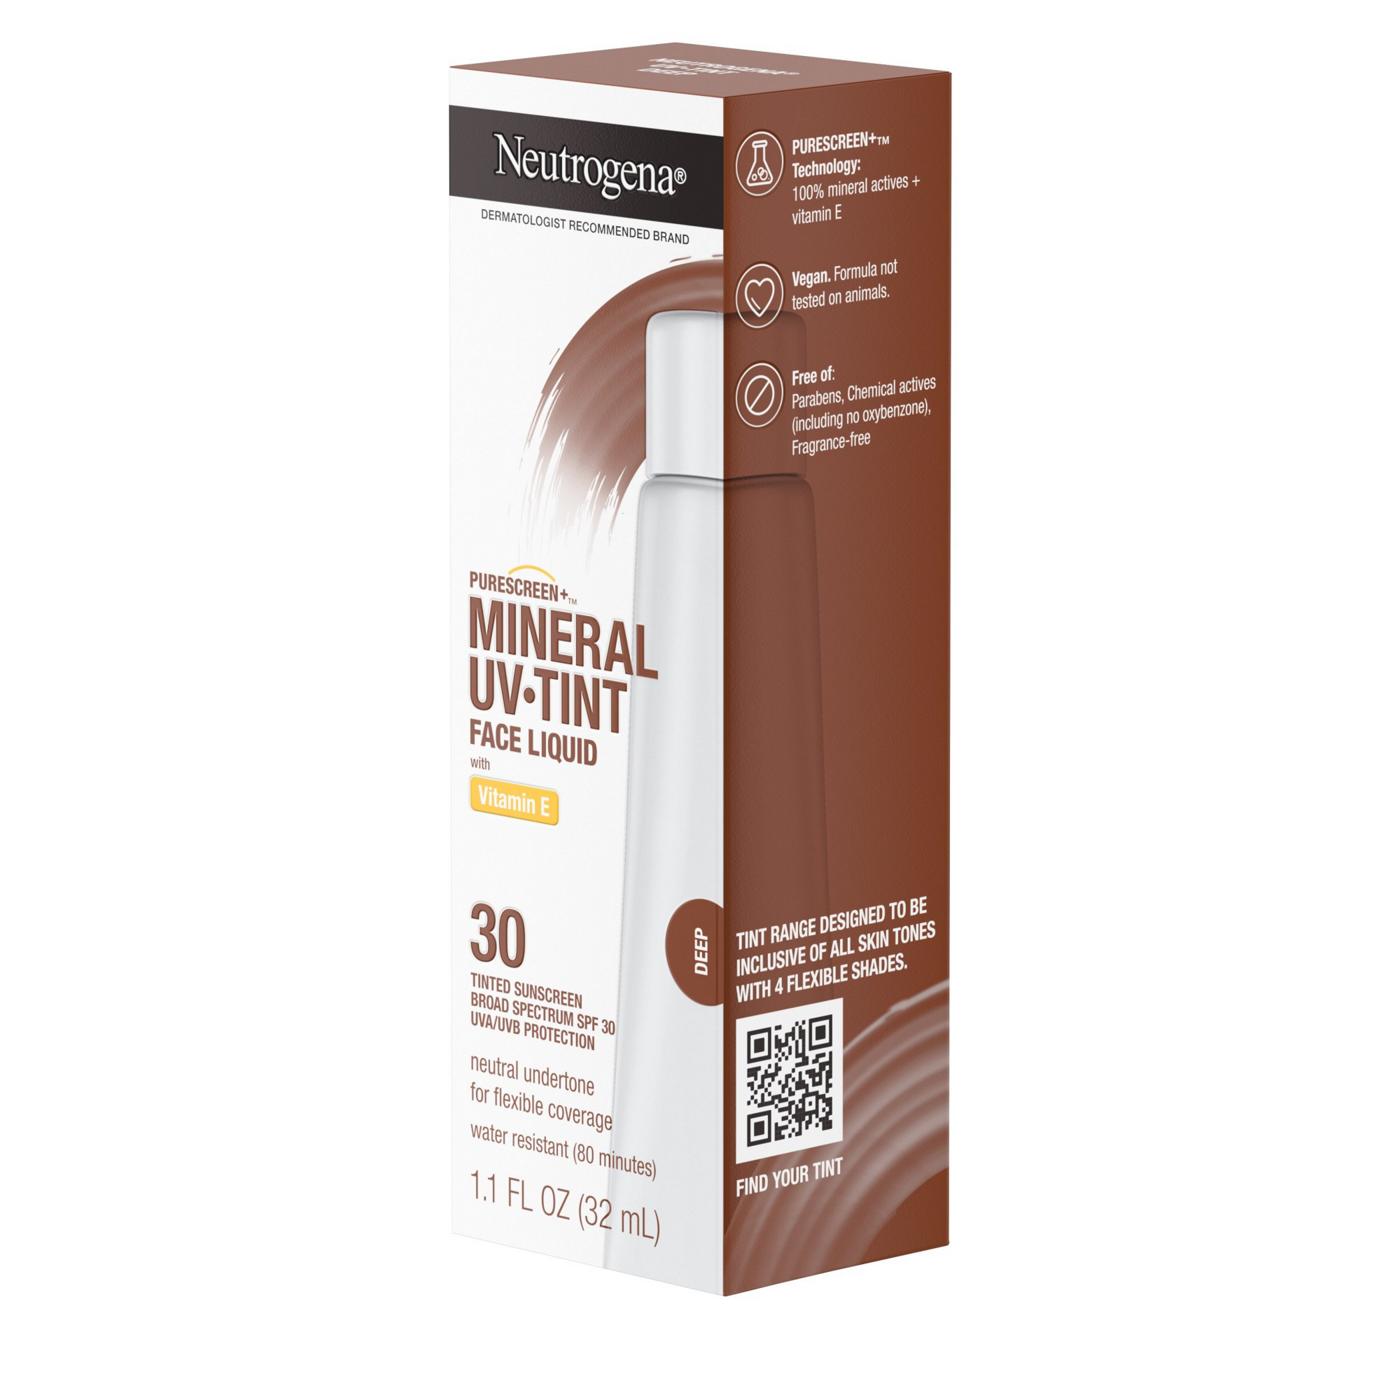 Neutrogena Purescreen+ Mineral Uv Tint Face Liquid With Vitamin E, Tinted Sunscreen Broad Spectrum SPF 30, Deep; image 3 of 8